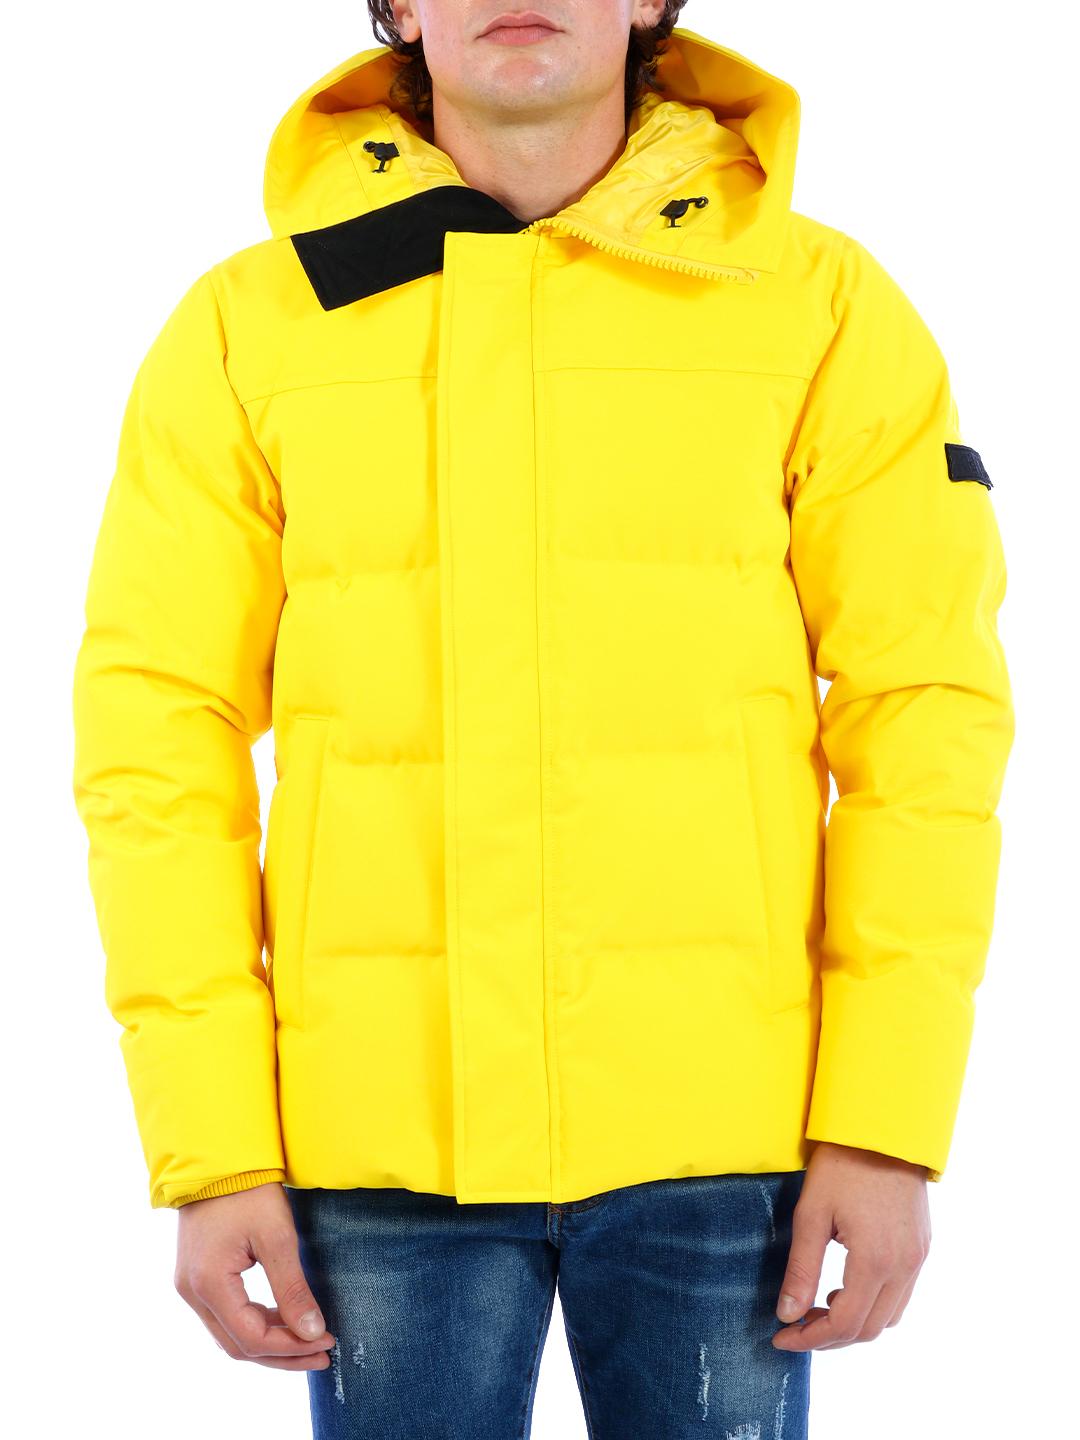 kenzo yellow jacket Cheaper Than Retail 